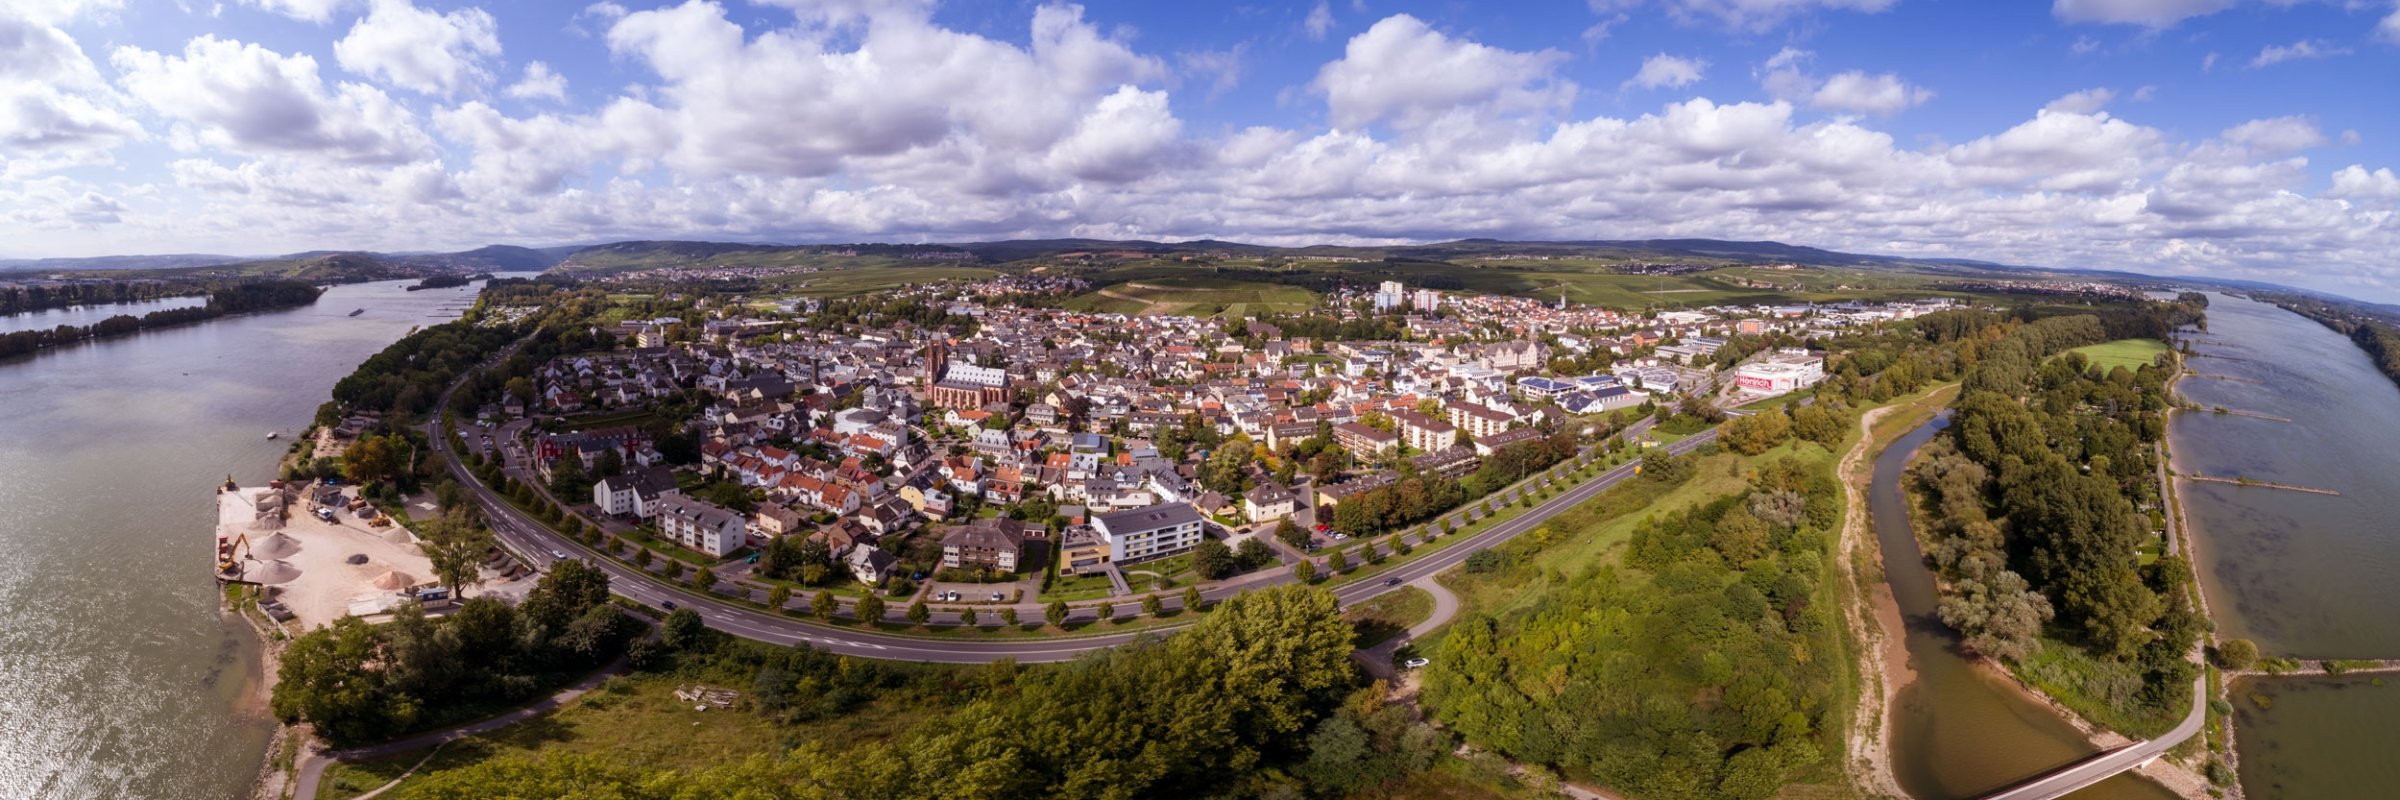 Panorama Geisenheim2 Copyright Filmagentur Rheingau Gbr ?cid=44.1na&resize=f31fae 2400x800c